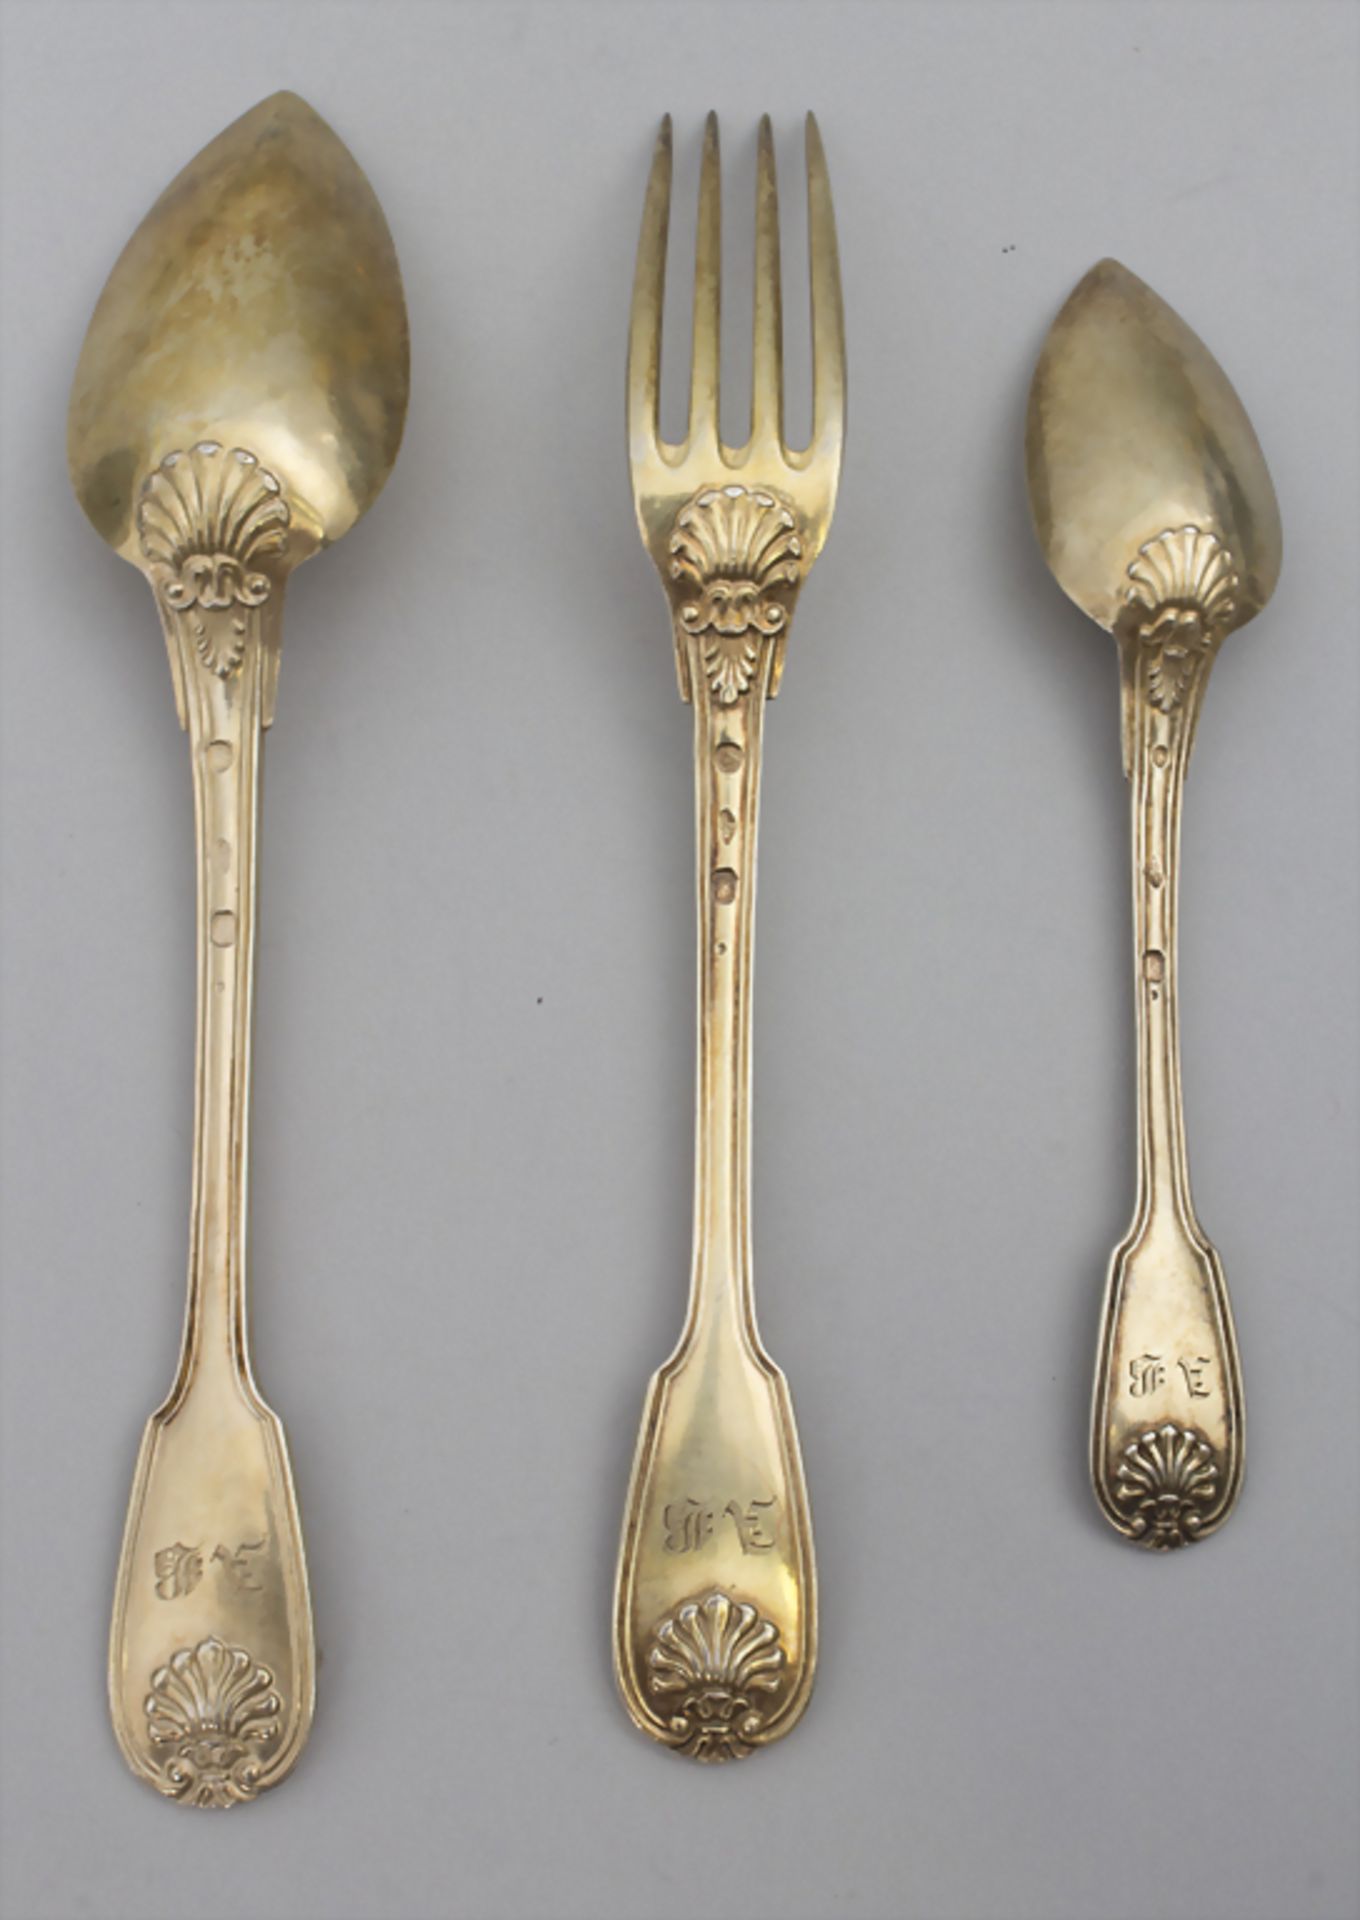 36 tlg. Silberbesteck / A 36-piece set of silver cutlery, Charles Salomon Mahler, Paris, 1824-18 - Bild 8 aus 15